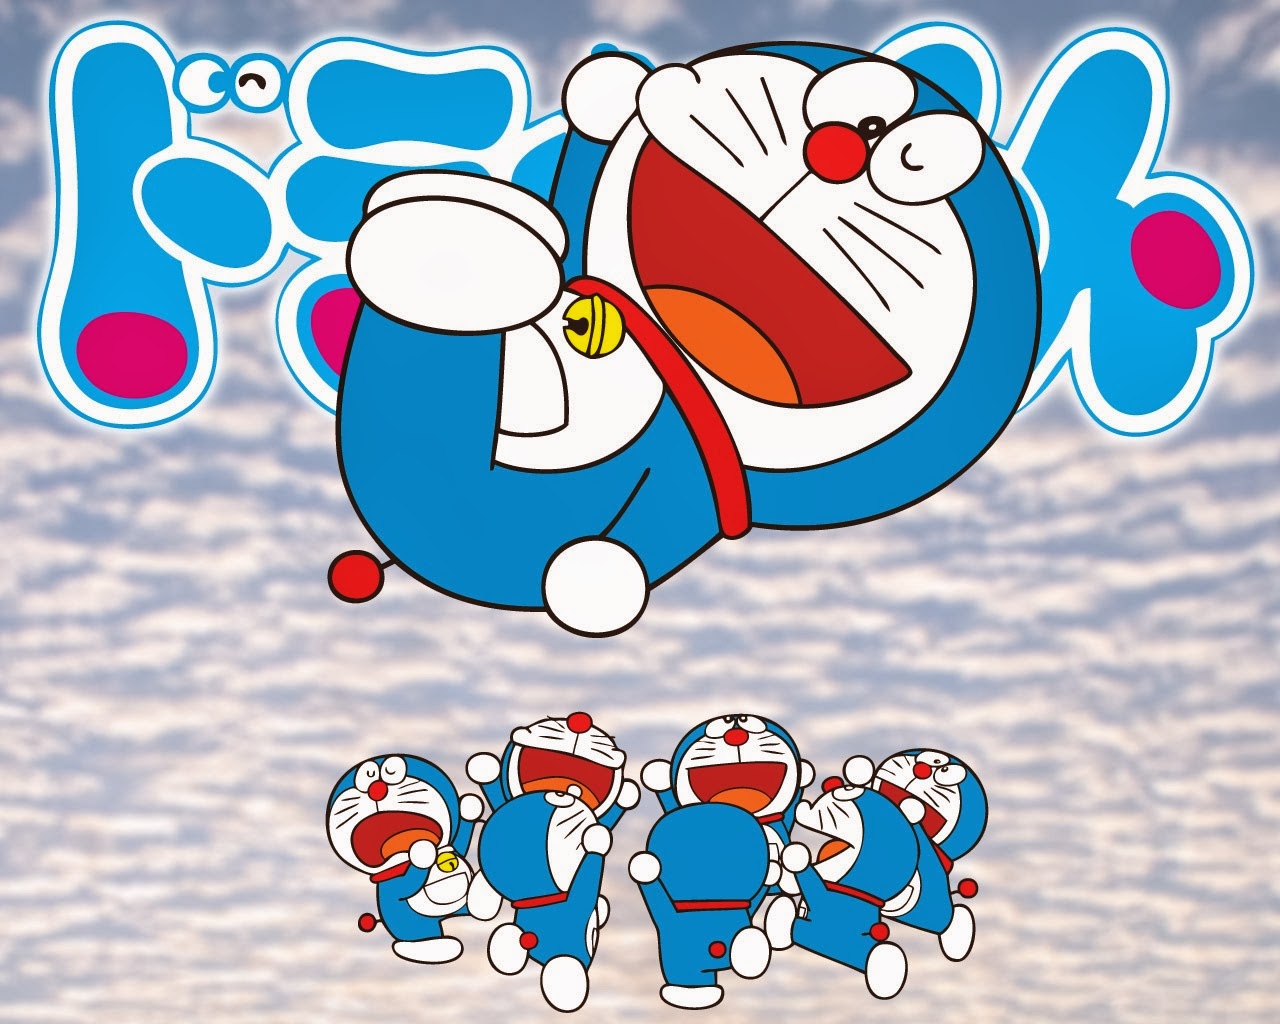 20 Fakta Unik Tentang Doraemon 9J Zone